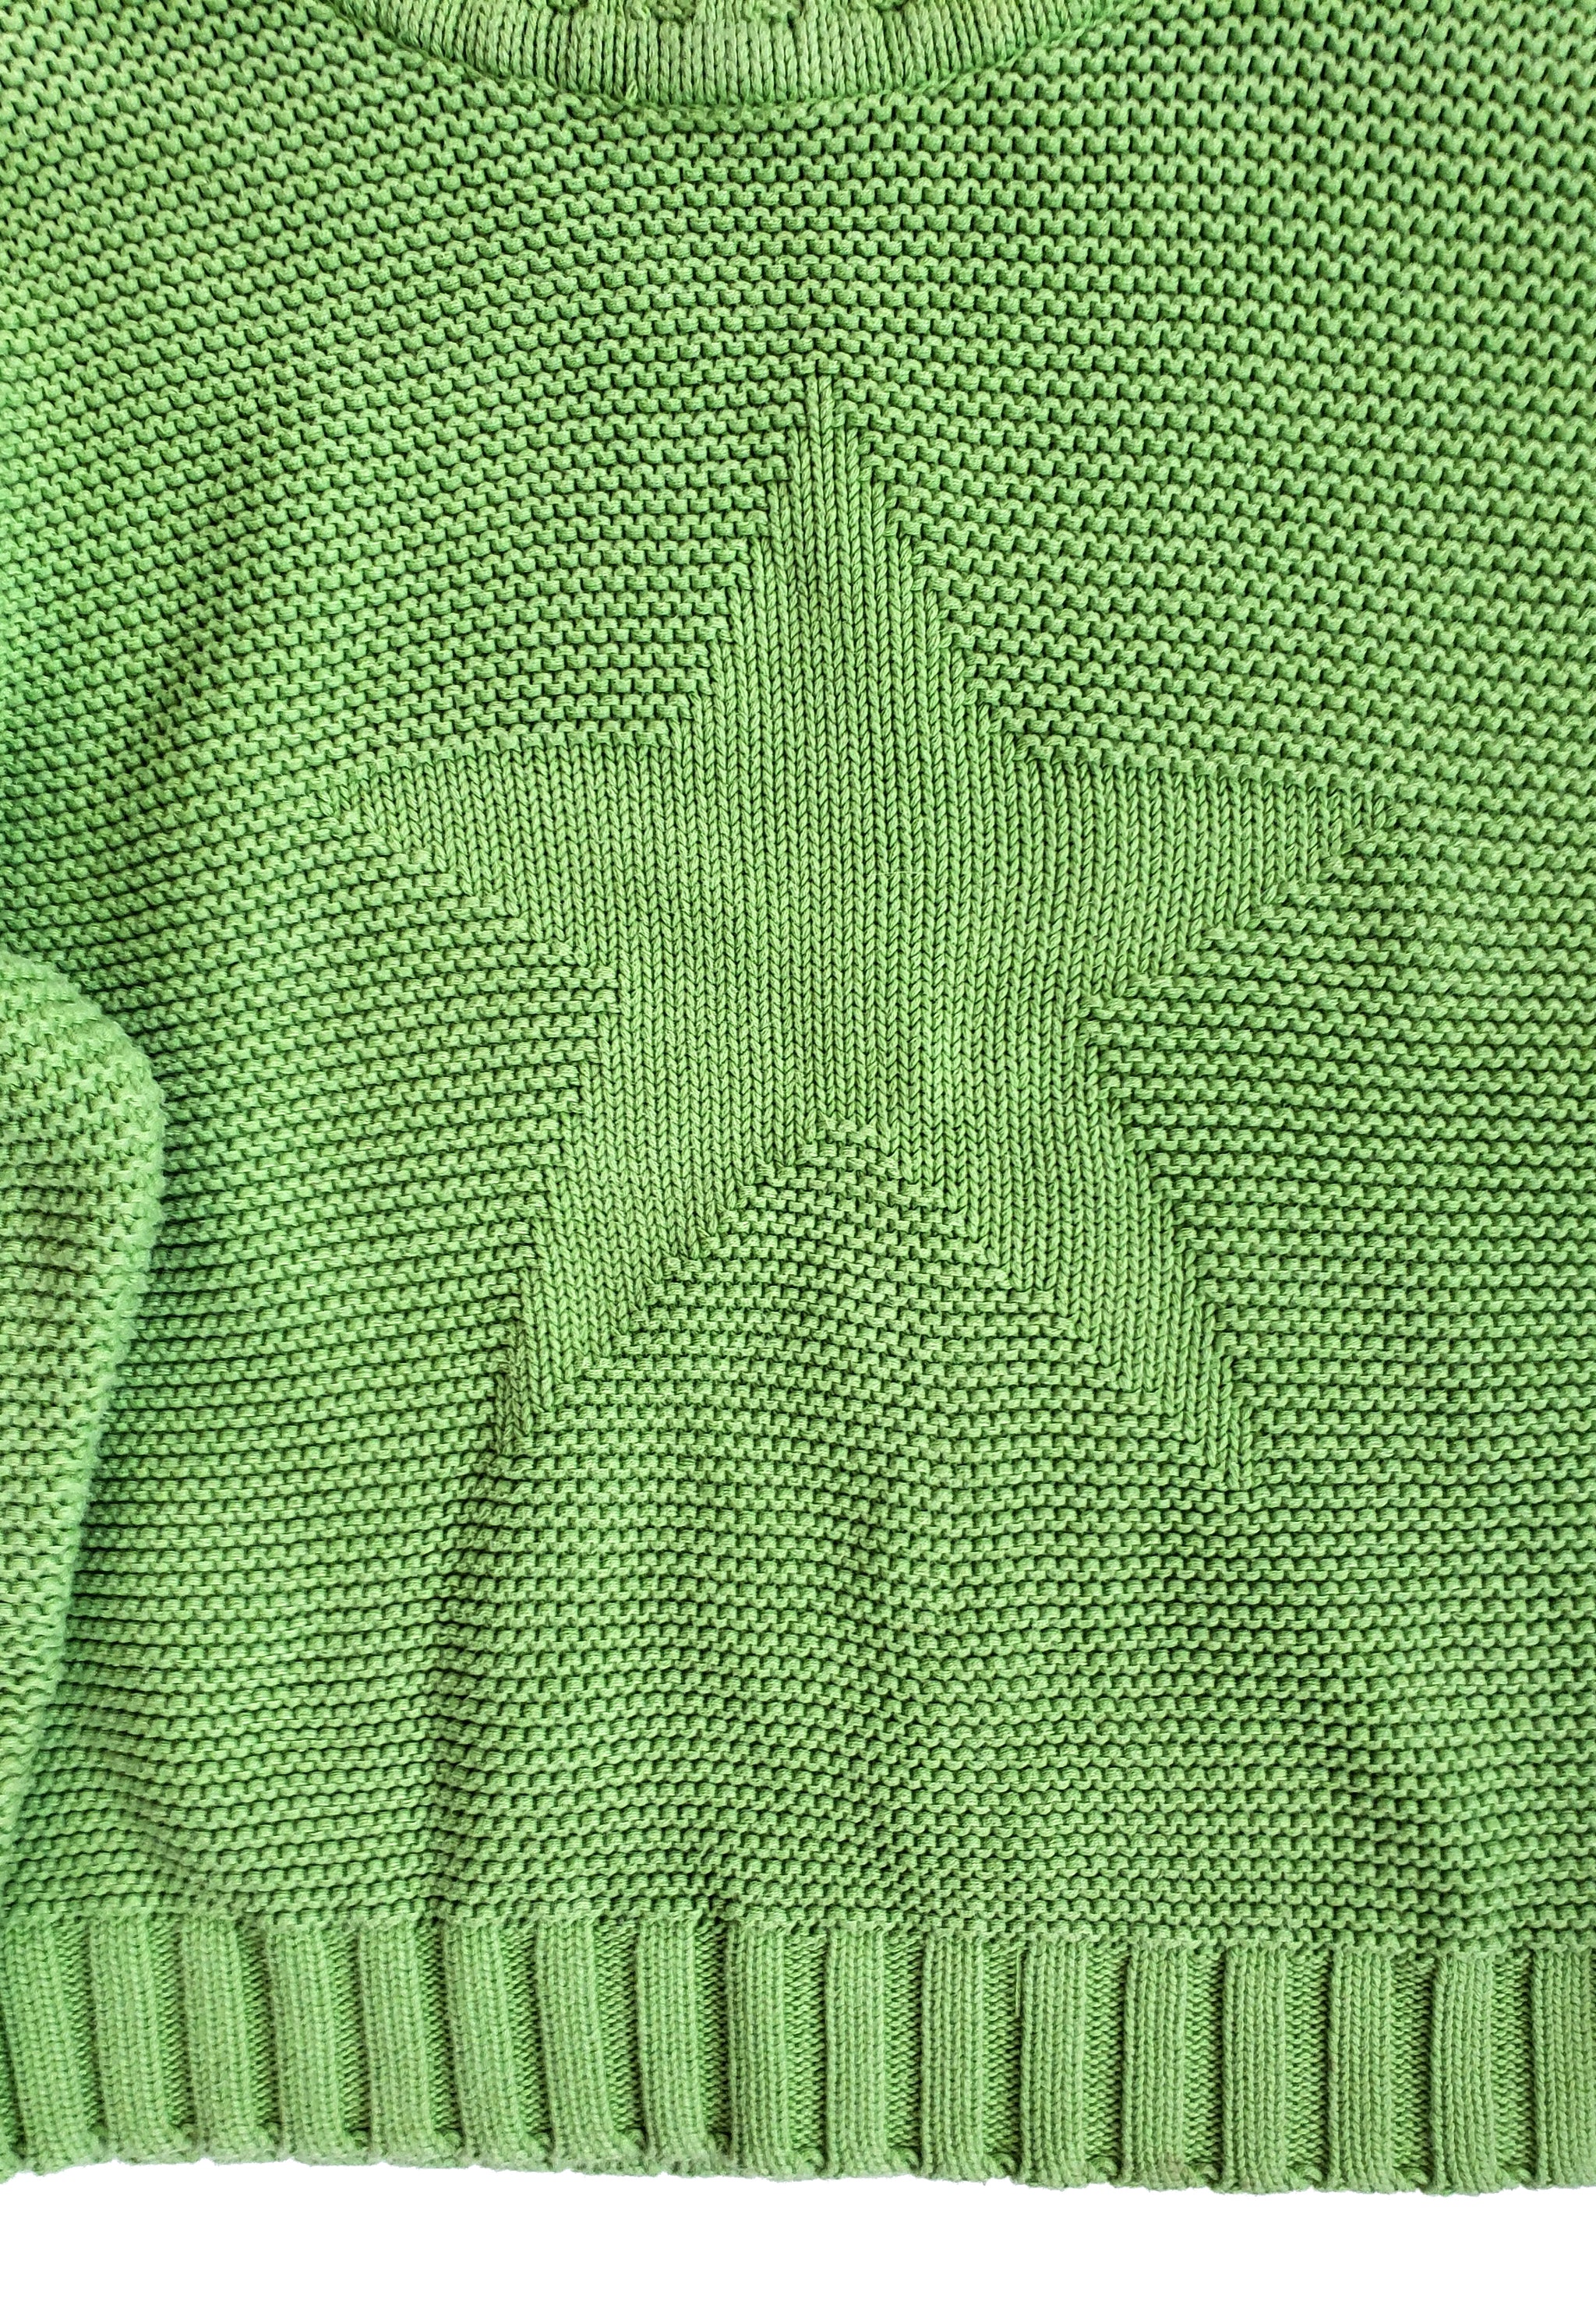 Liz Claiborne 100% Cotton Bright Green Star Sweater